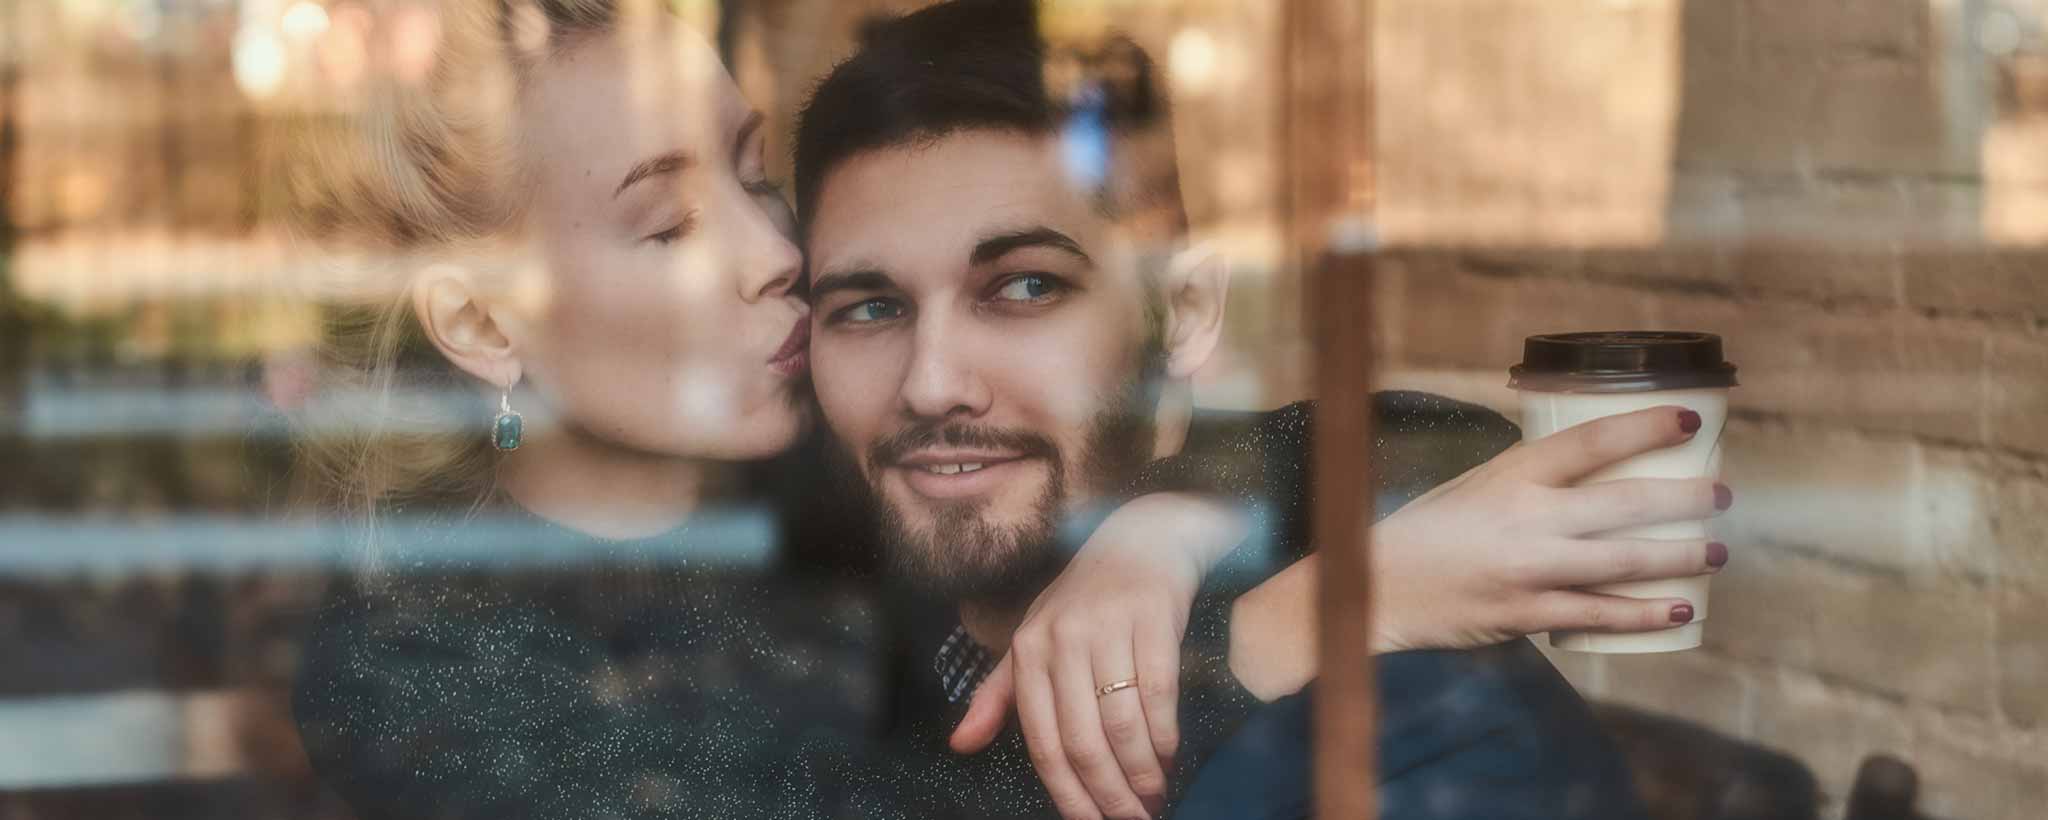 'Romanic kiss in cafe window'